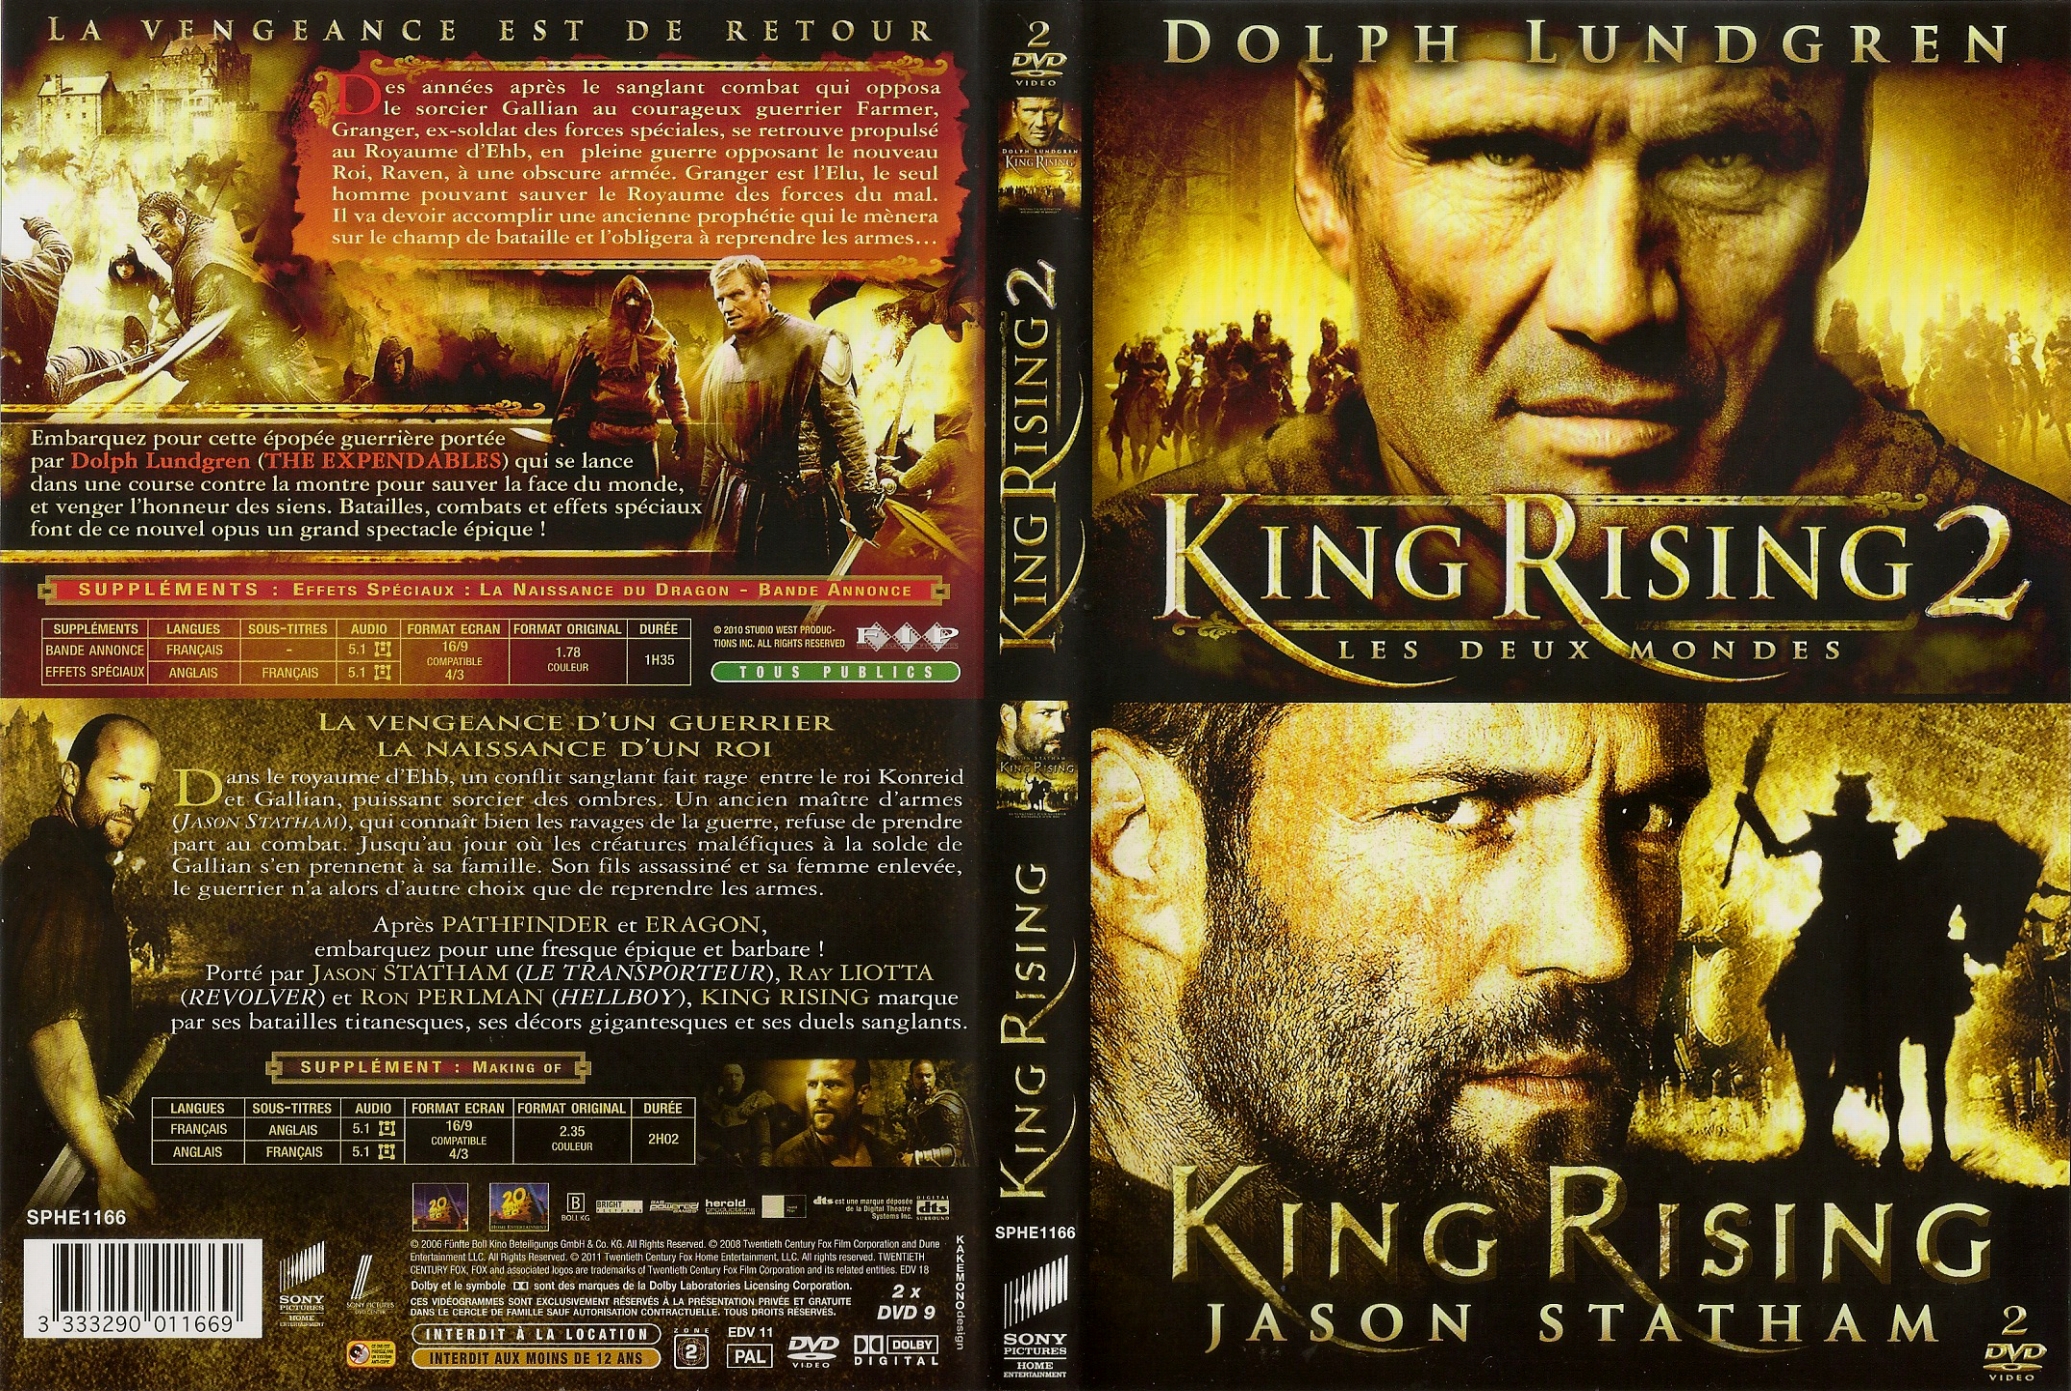 Jaquette DVD King Rising 1 & 2 custom